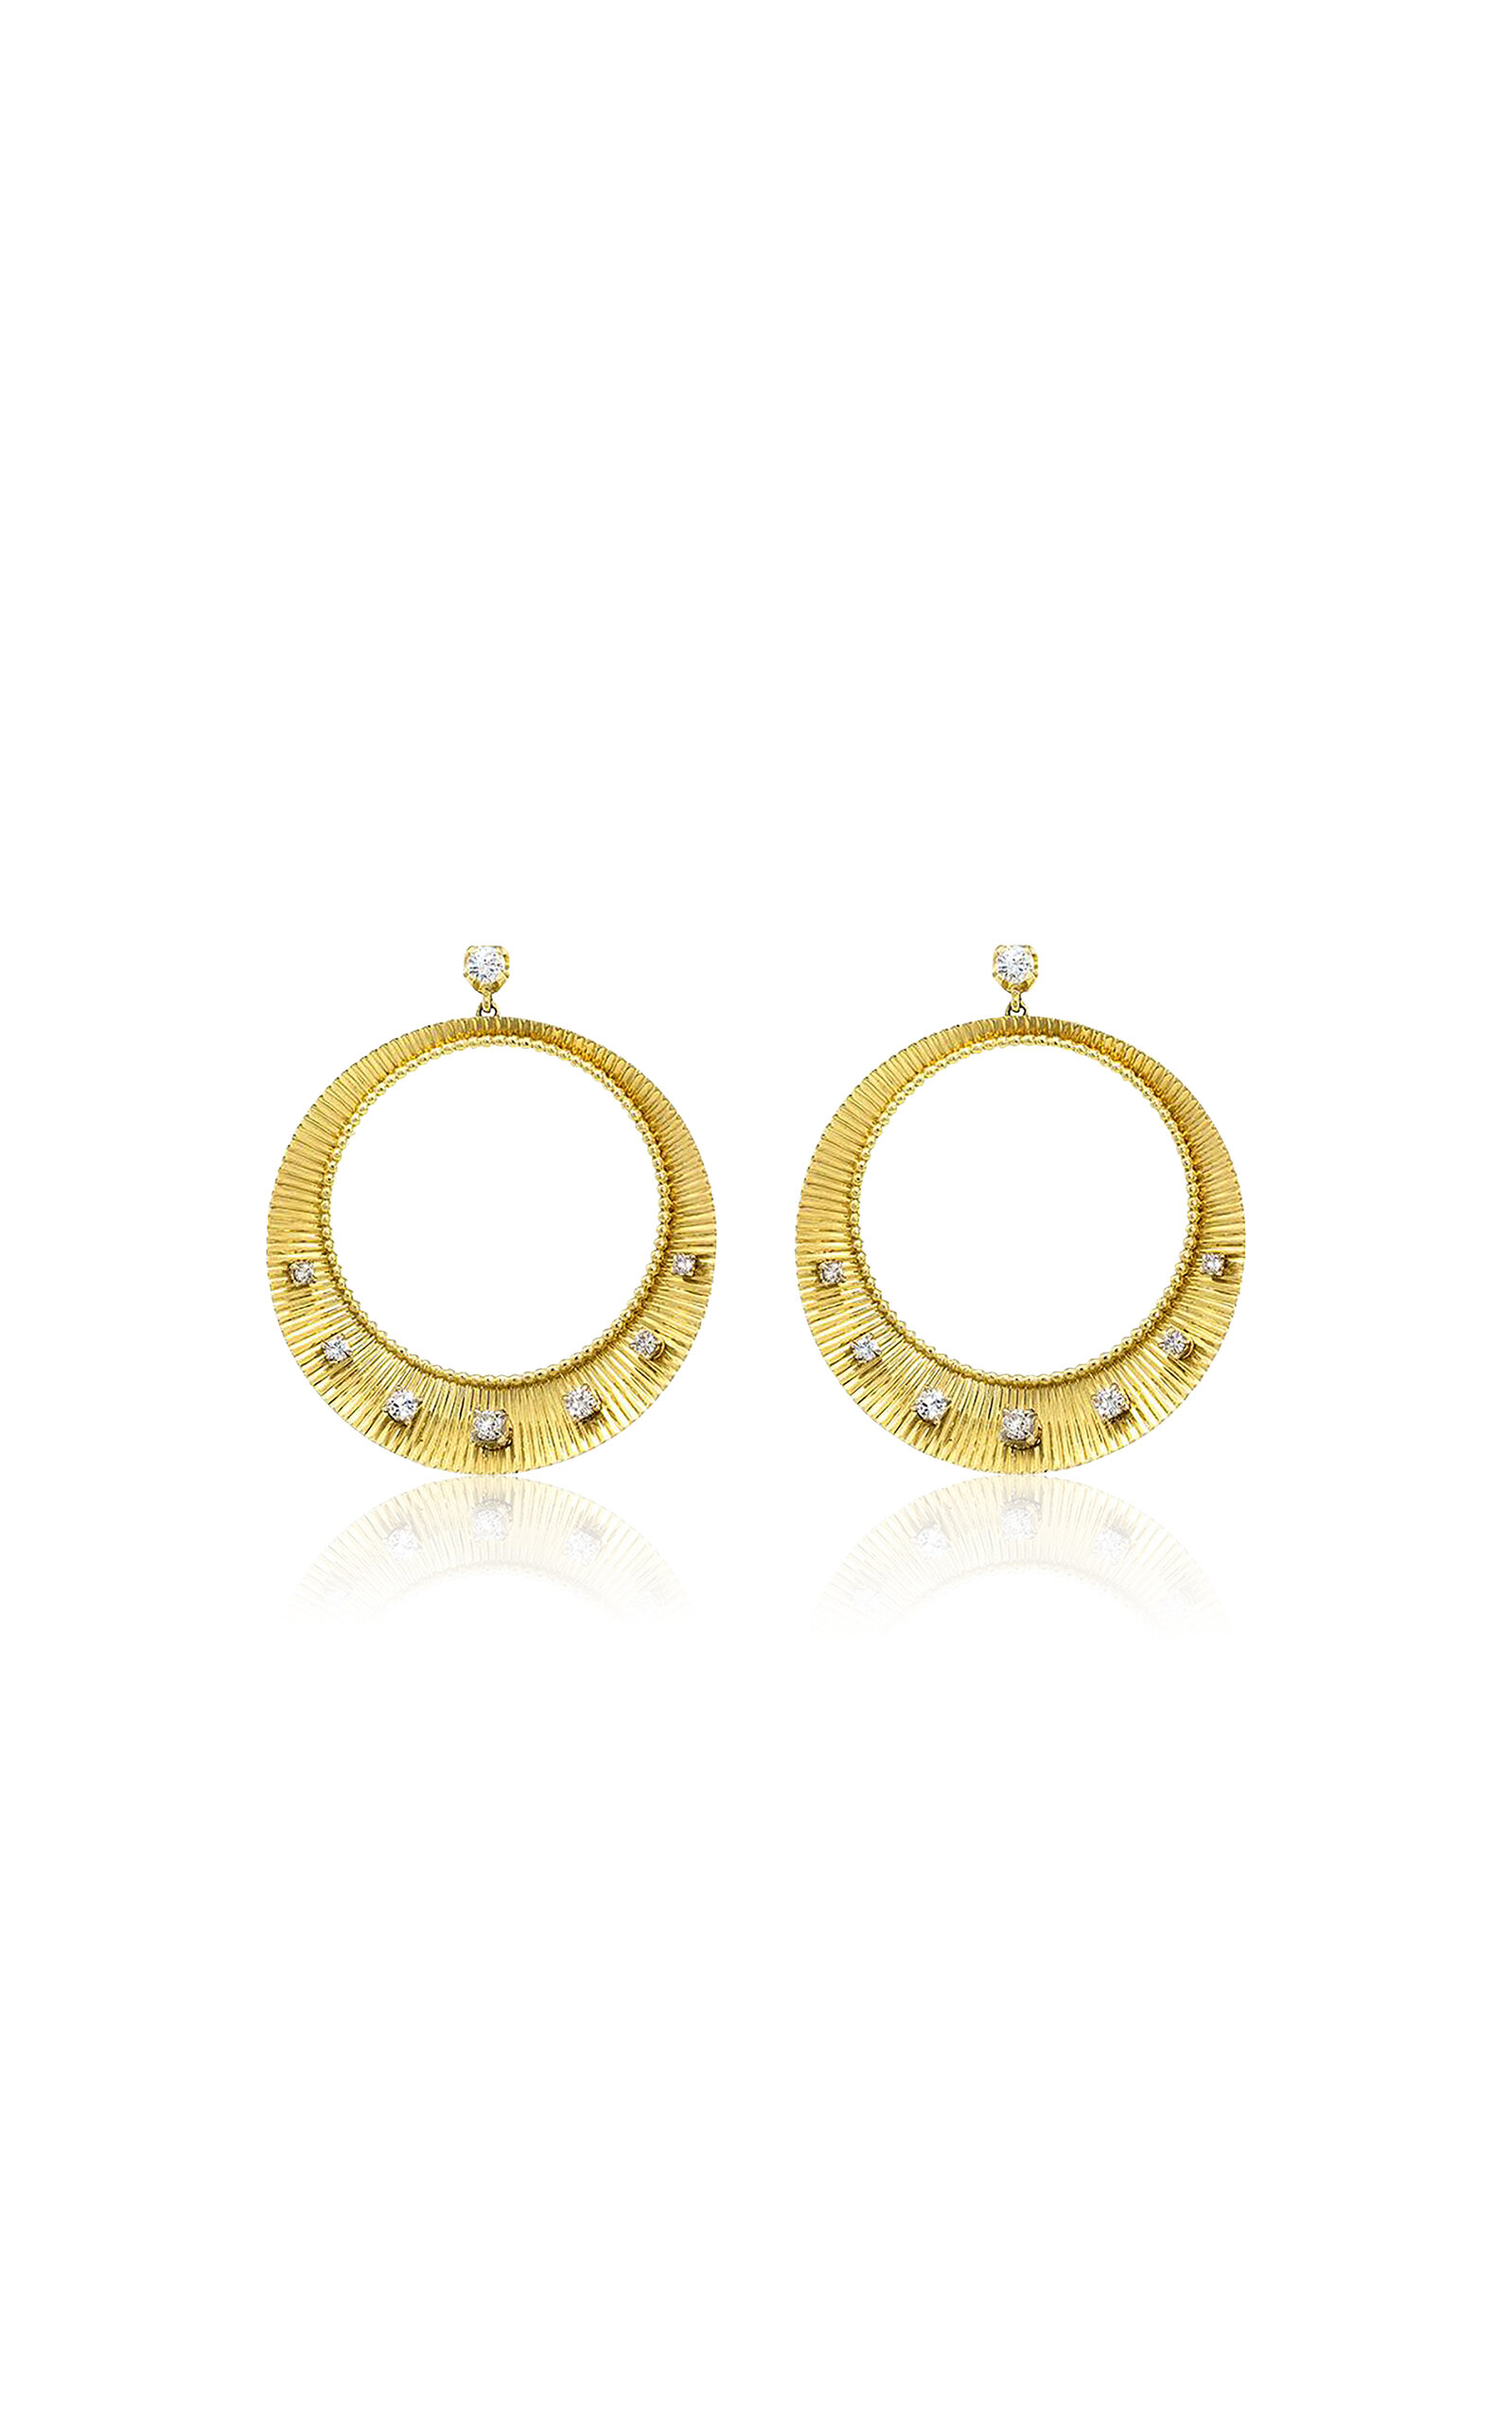 Shop Jenna Blake 18k Yellow Gold Diamond Earrings